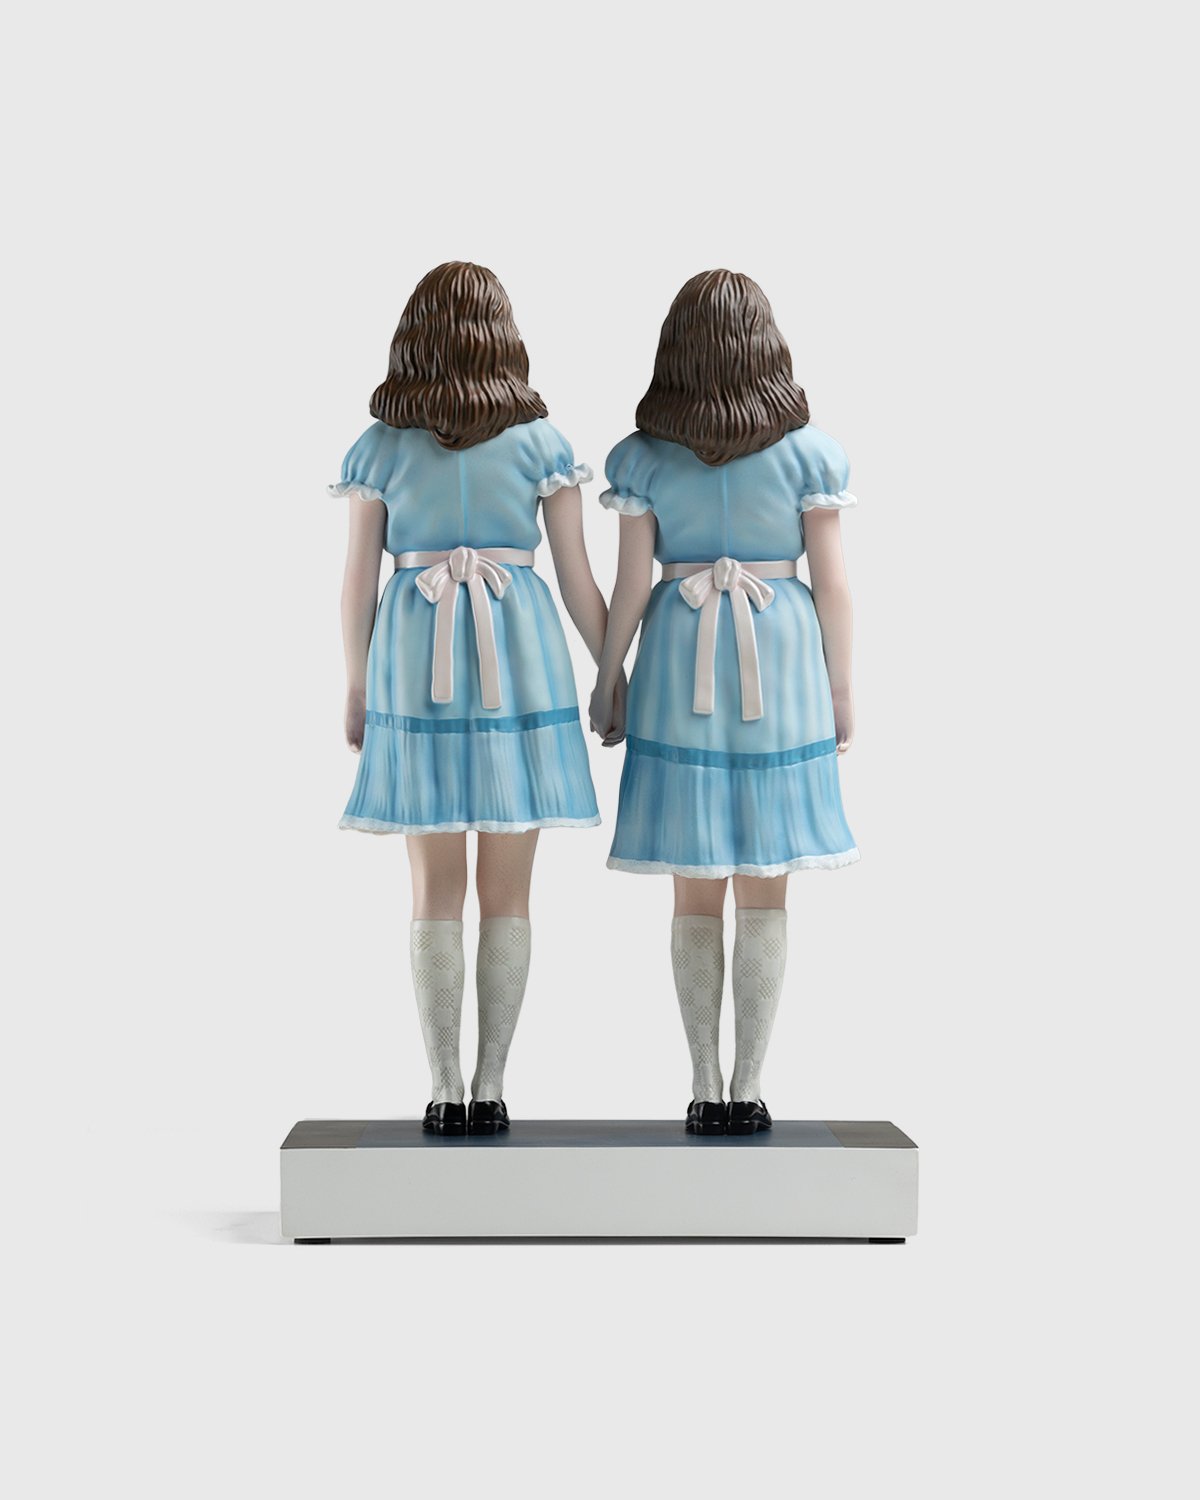 Medicom - The Shining Twins Statue Multi - Lifestyle - Multi - Image 3